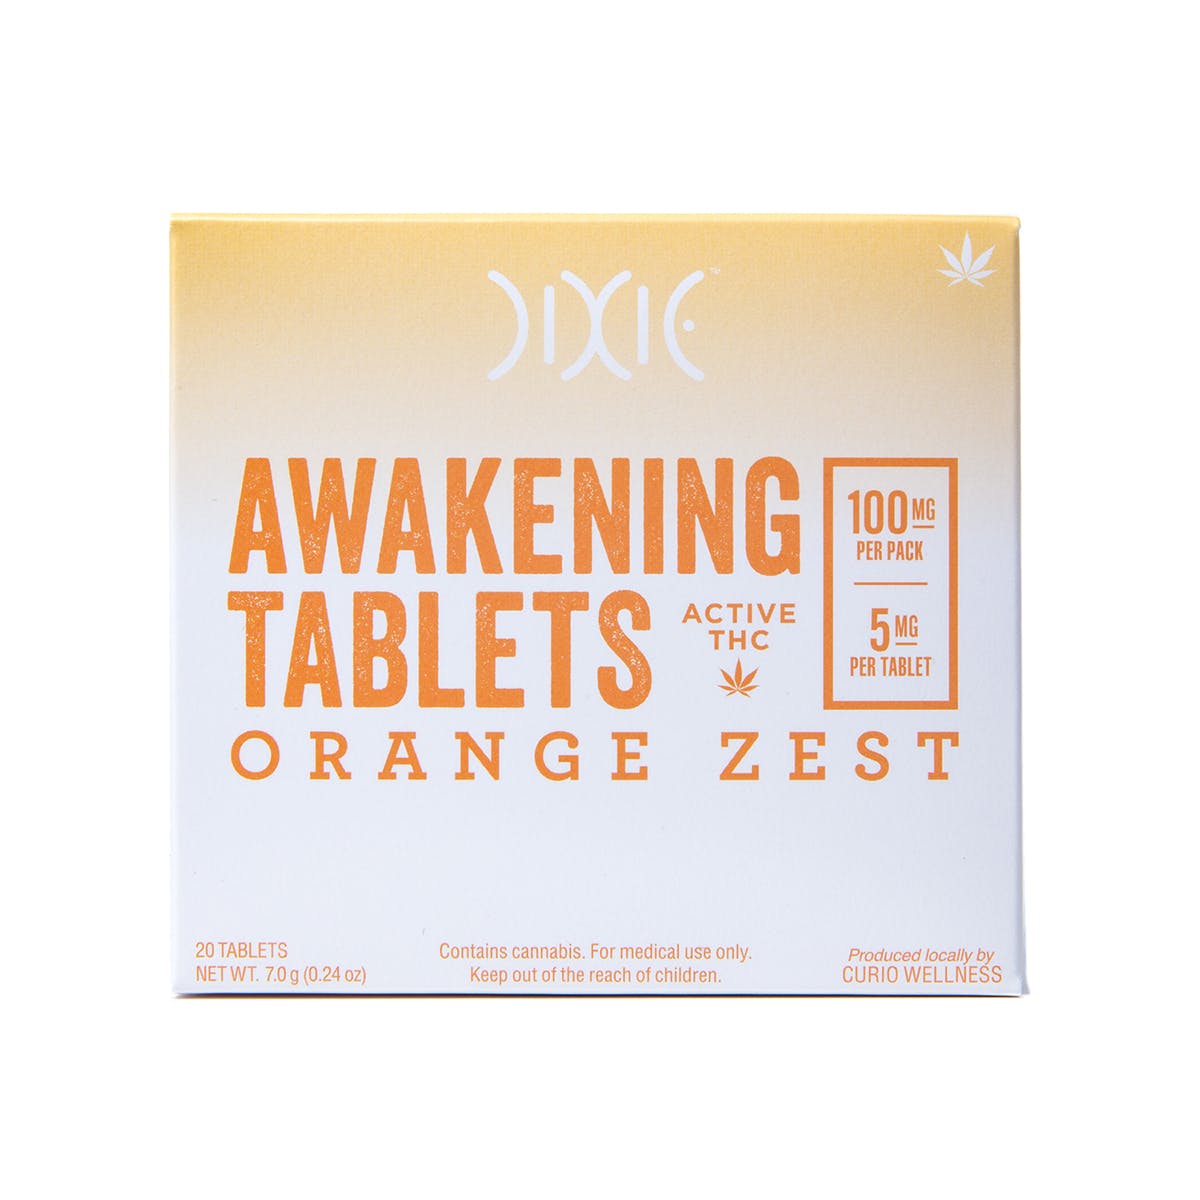 Awakening Tablets Orange Zest 100mg